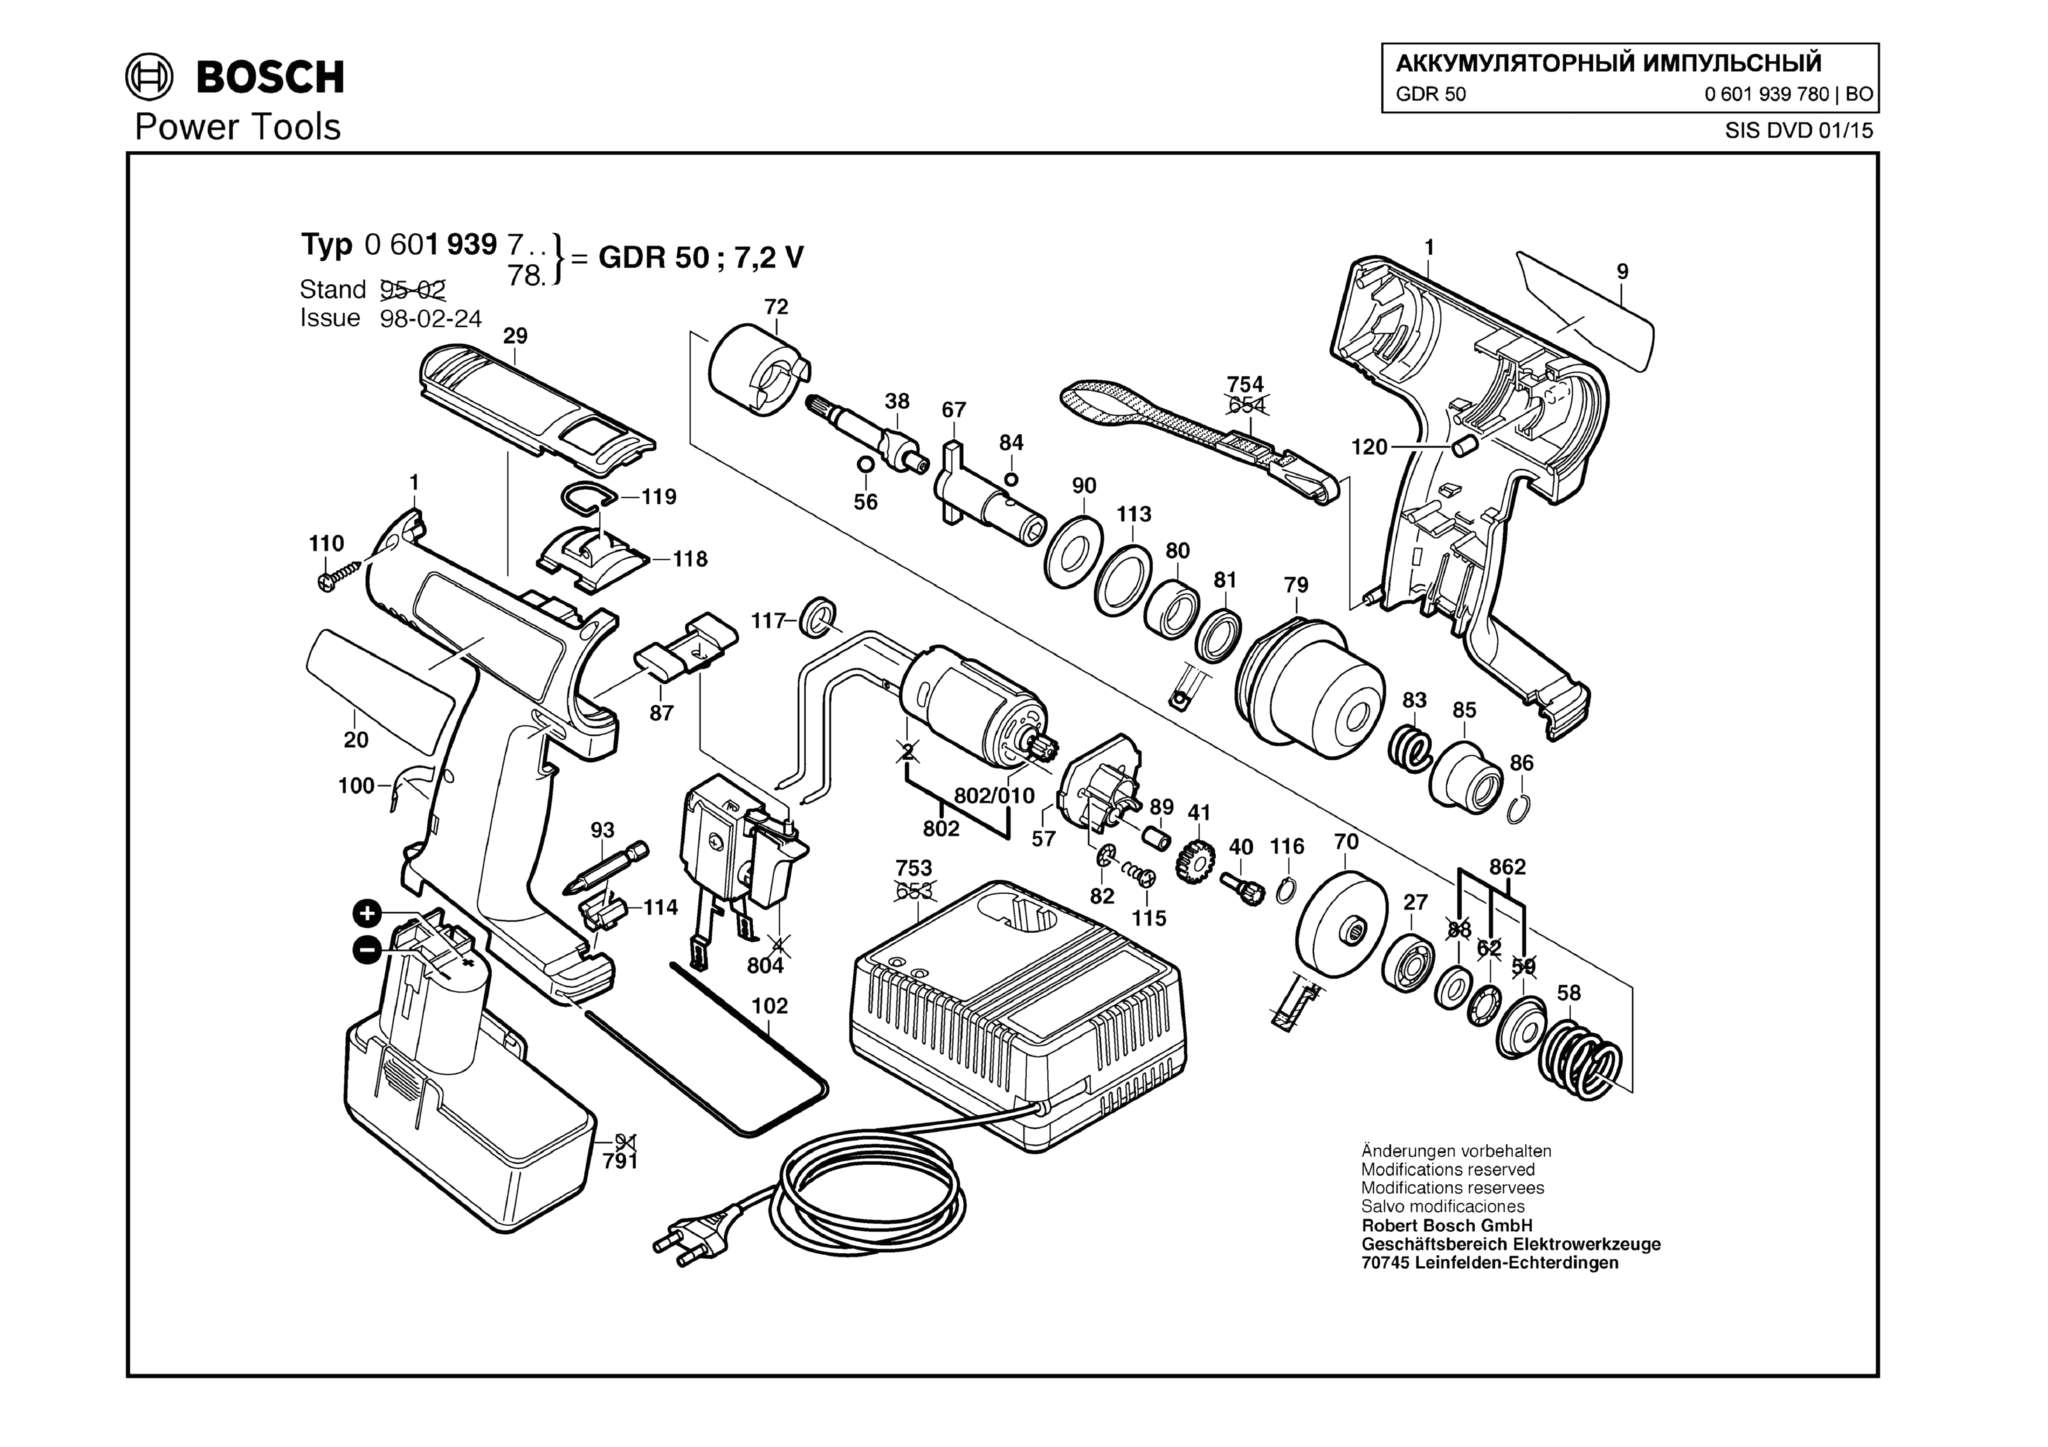 Запчасти, схема и деталировка Bosch GDR 50 (ТИП 0601939780)